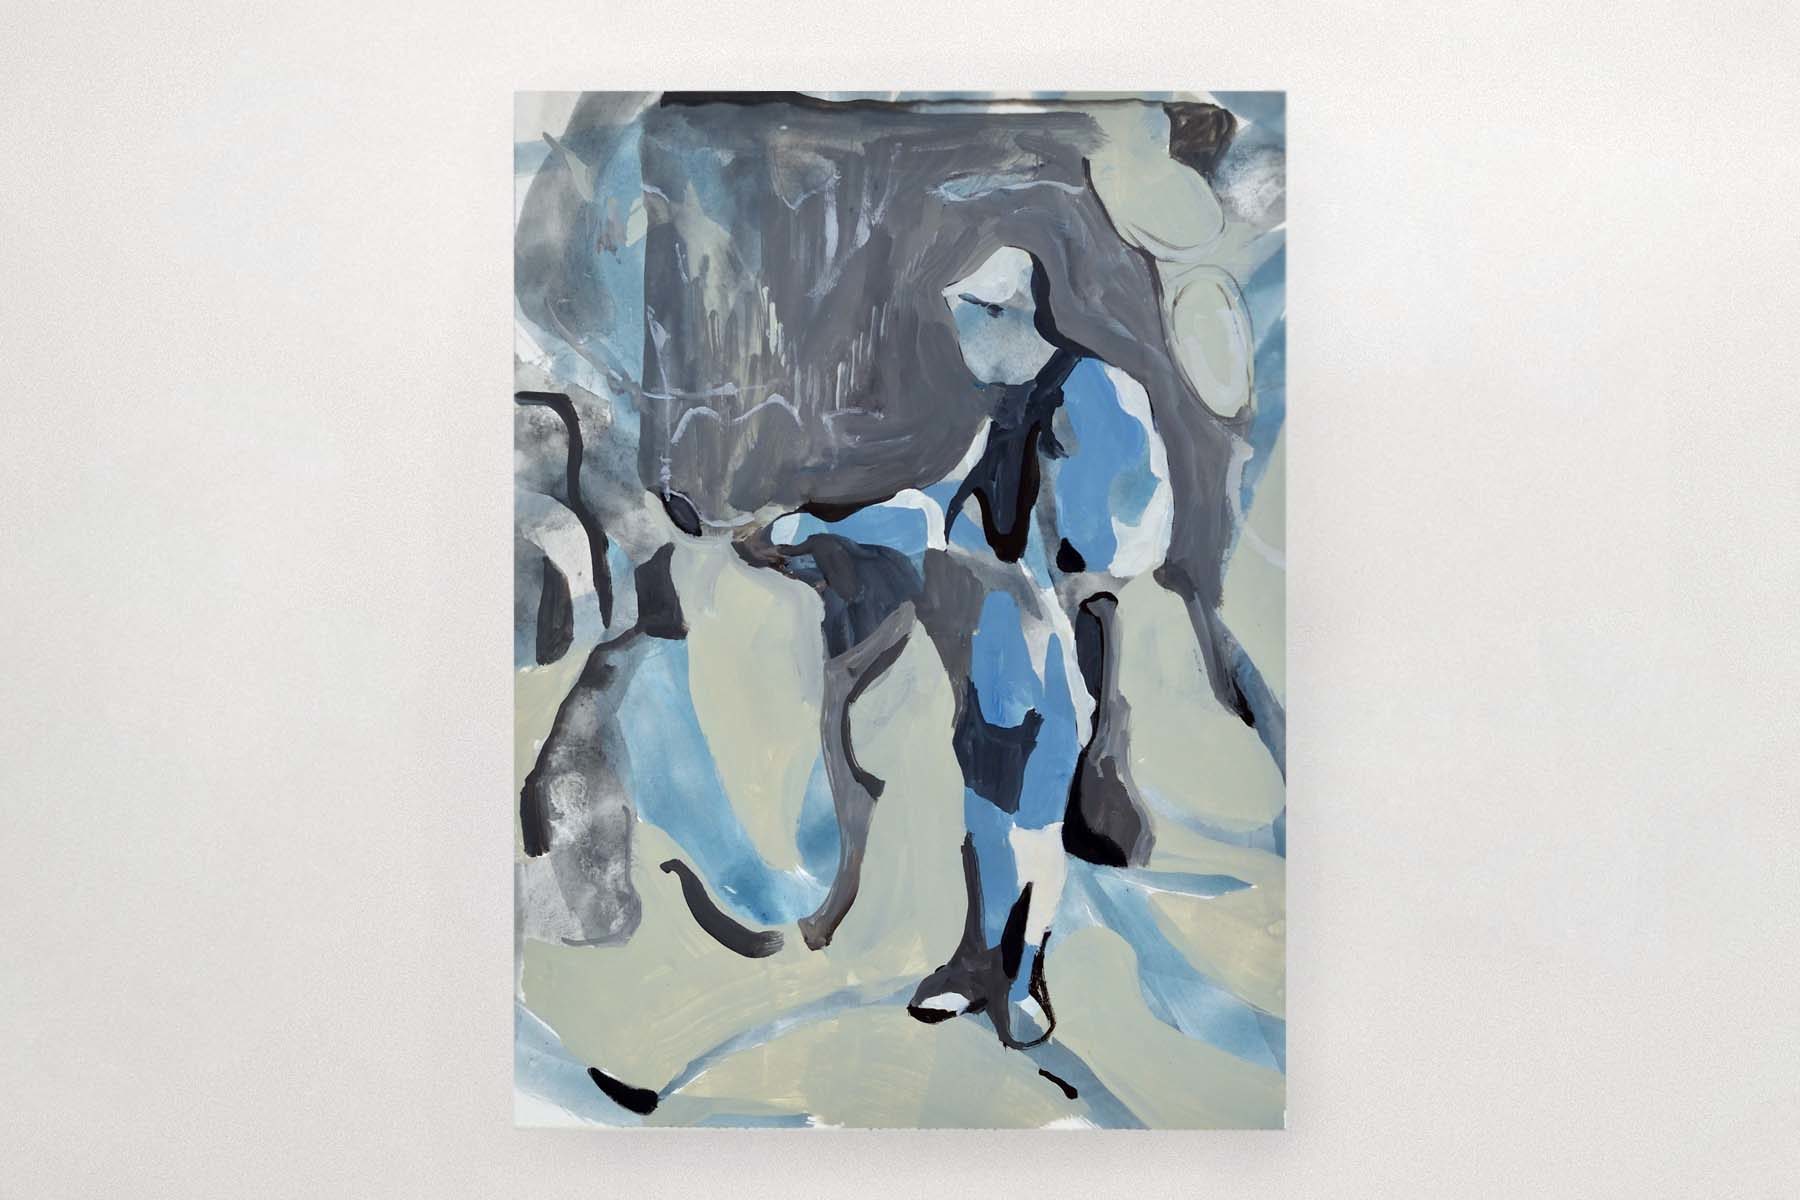 Raffaele Santillo, I nodi al pettine, 2018, tecnica mista su carta, 33 x 24 cm